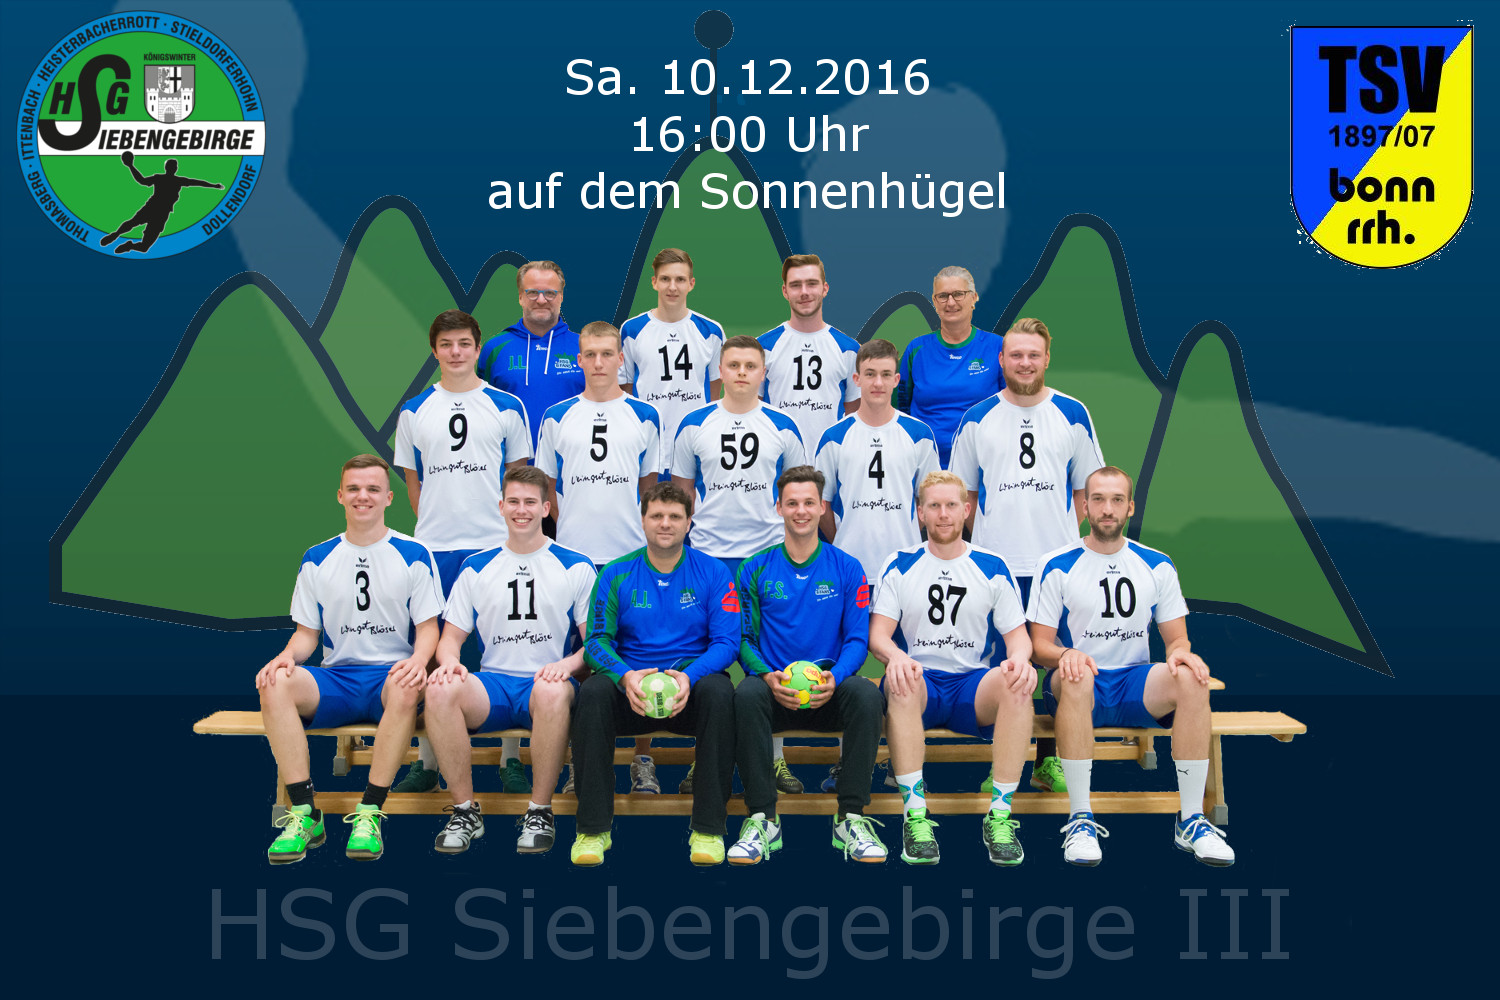 HSG3 TSV Bonn rrh